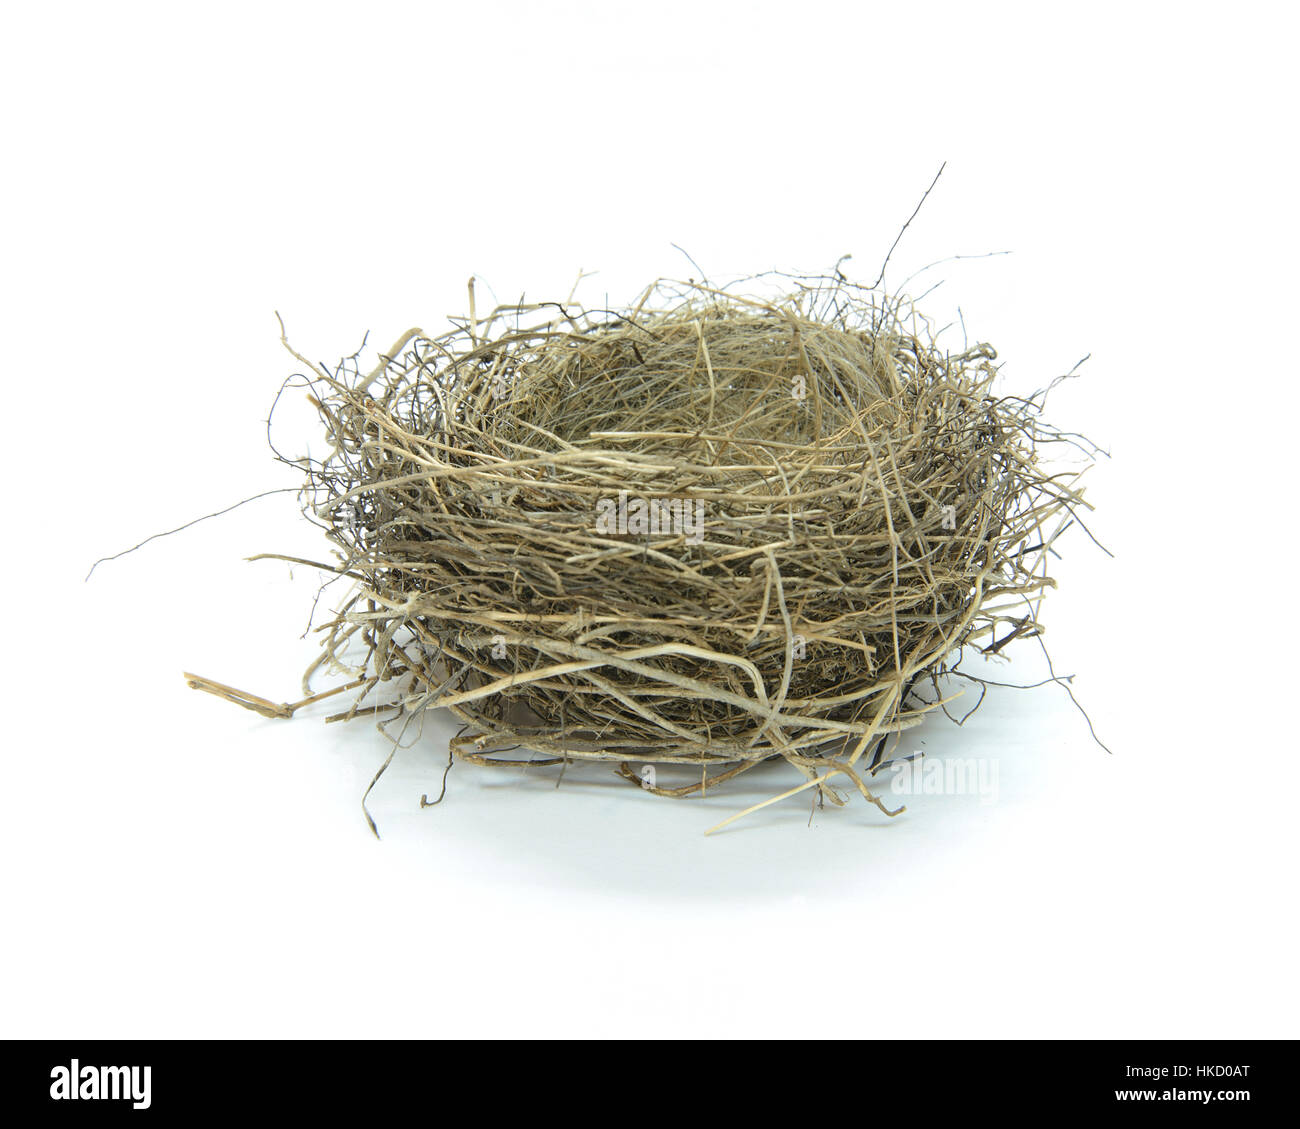 An empty Birds nest on a white background Stock Photo